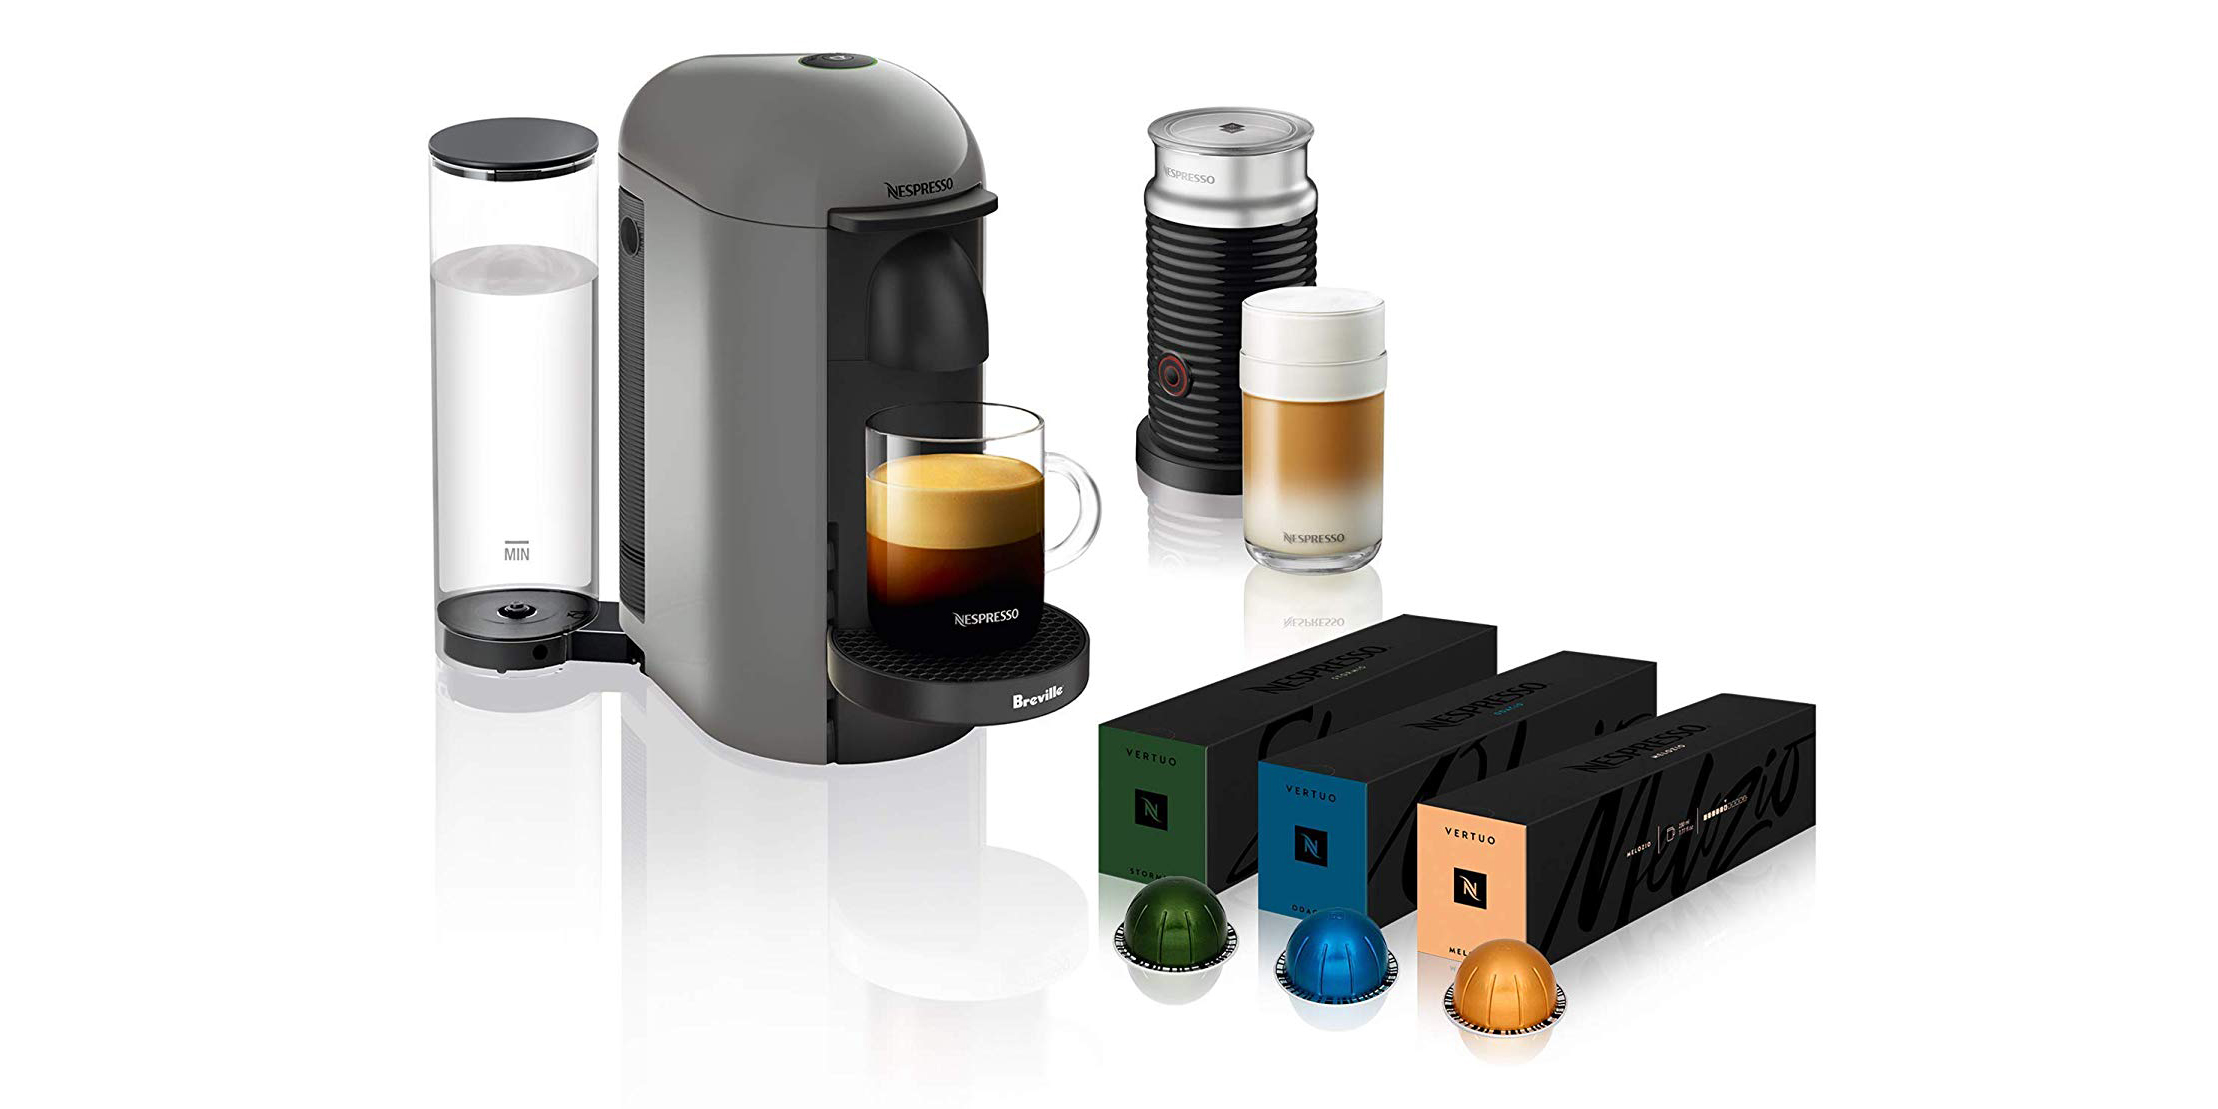 up-your-coffee-game-nespresso-espresso-machine-bundle-for-130-shipped